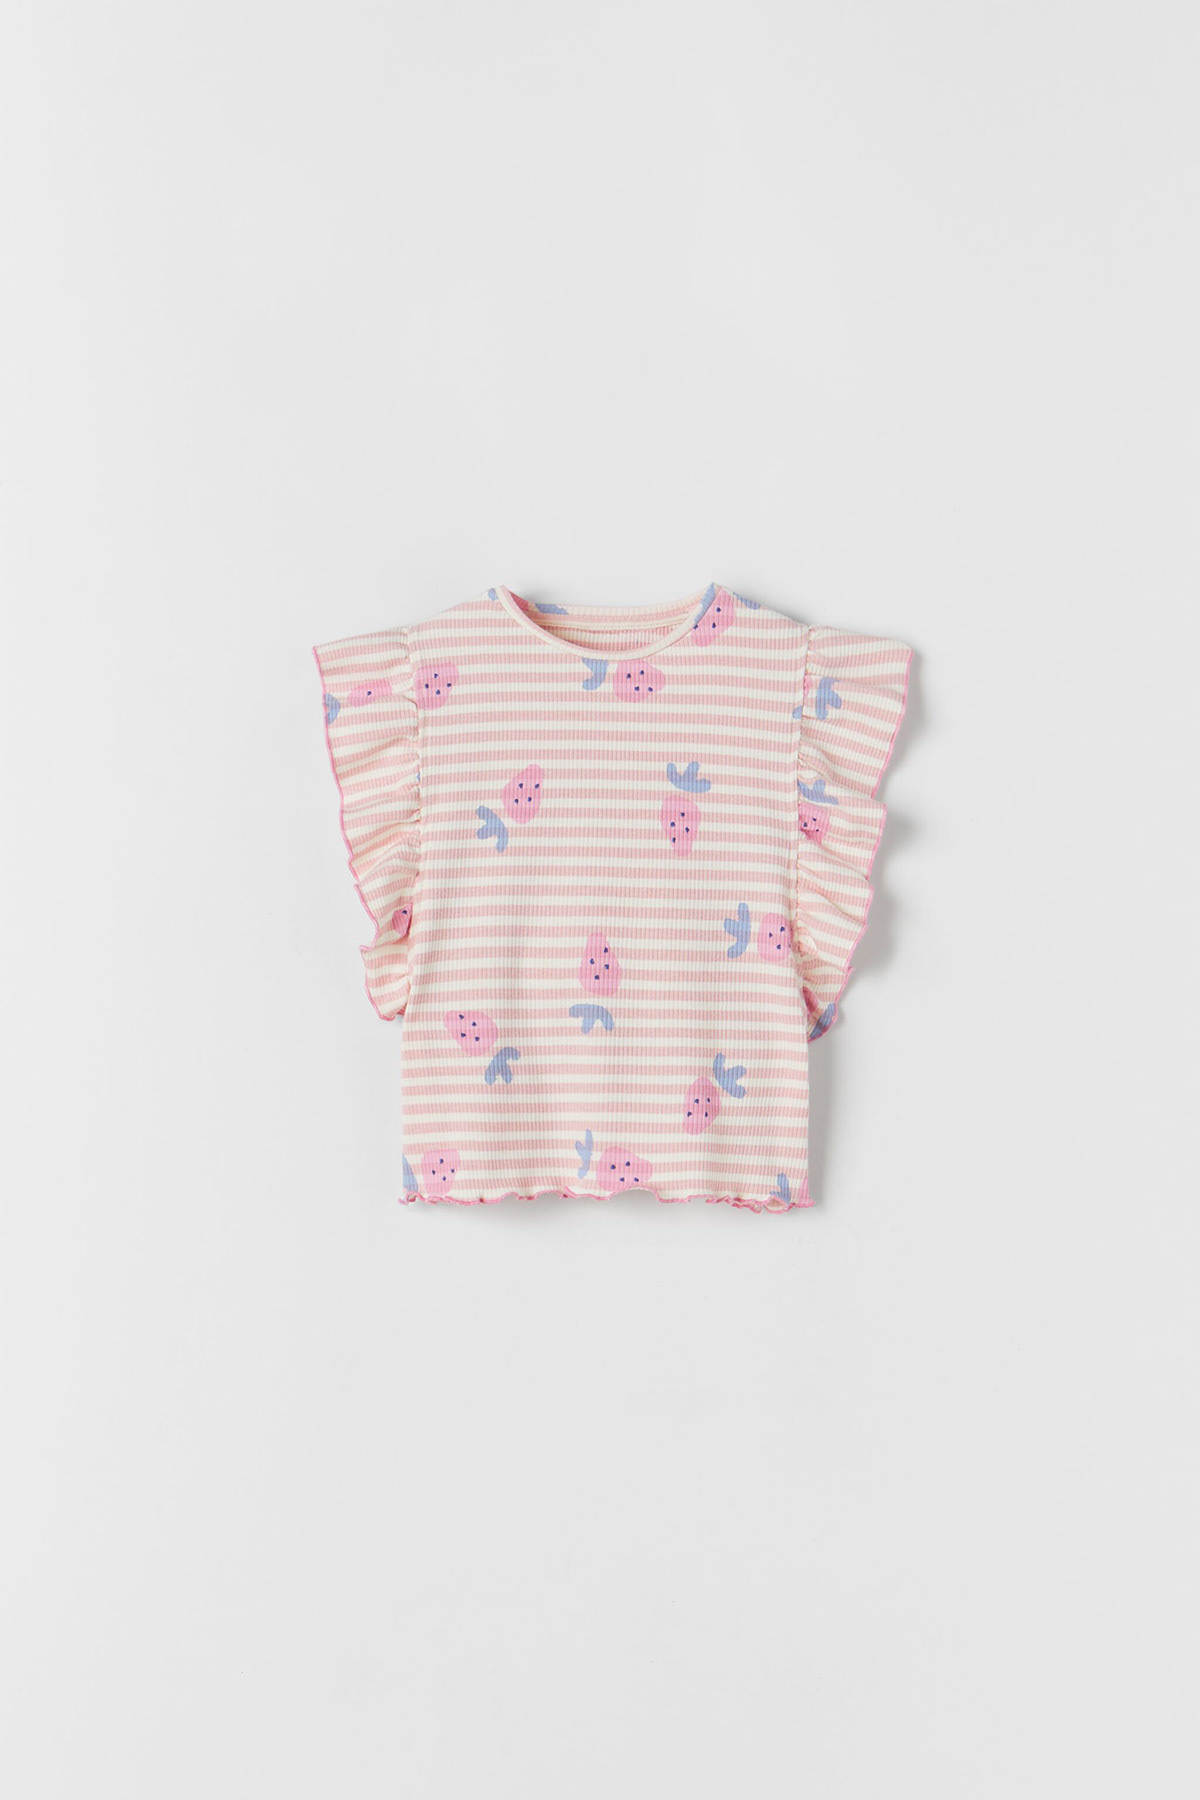 ZARA BABY GIRL SS21 - Strawberries T-shirt on Behance